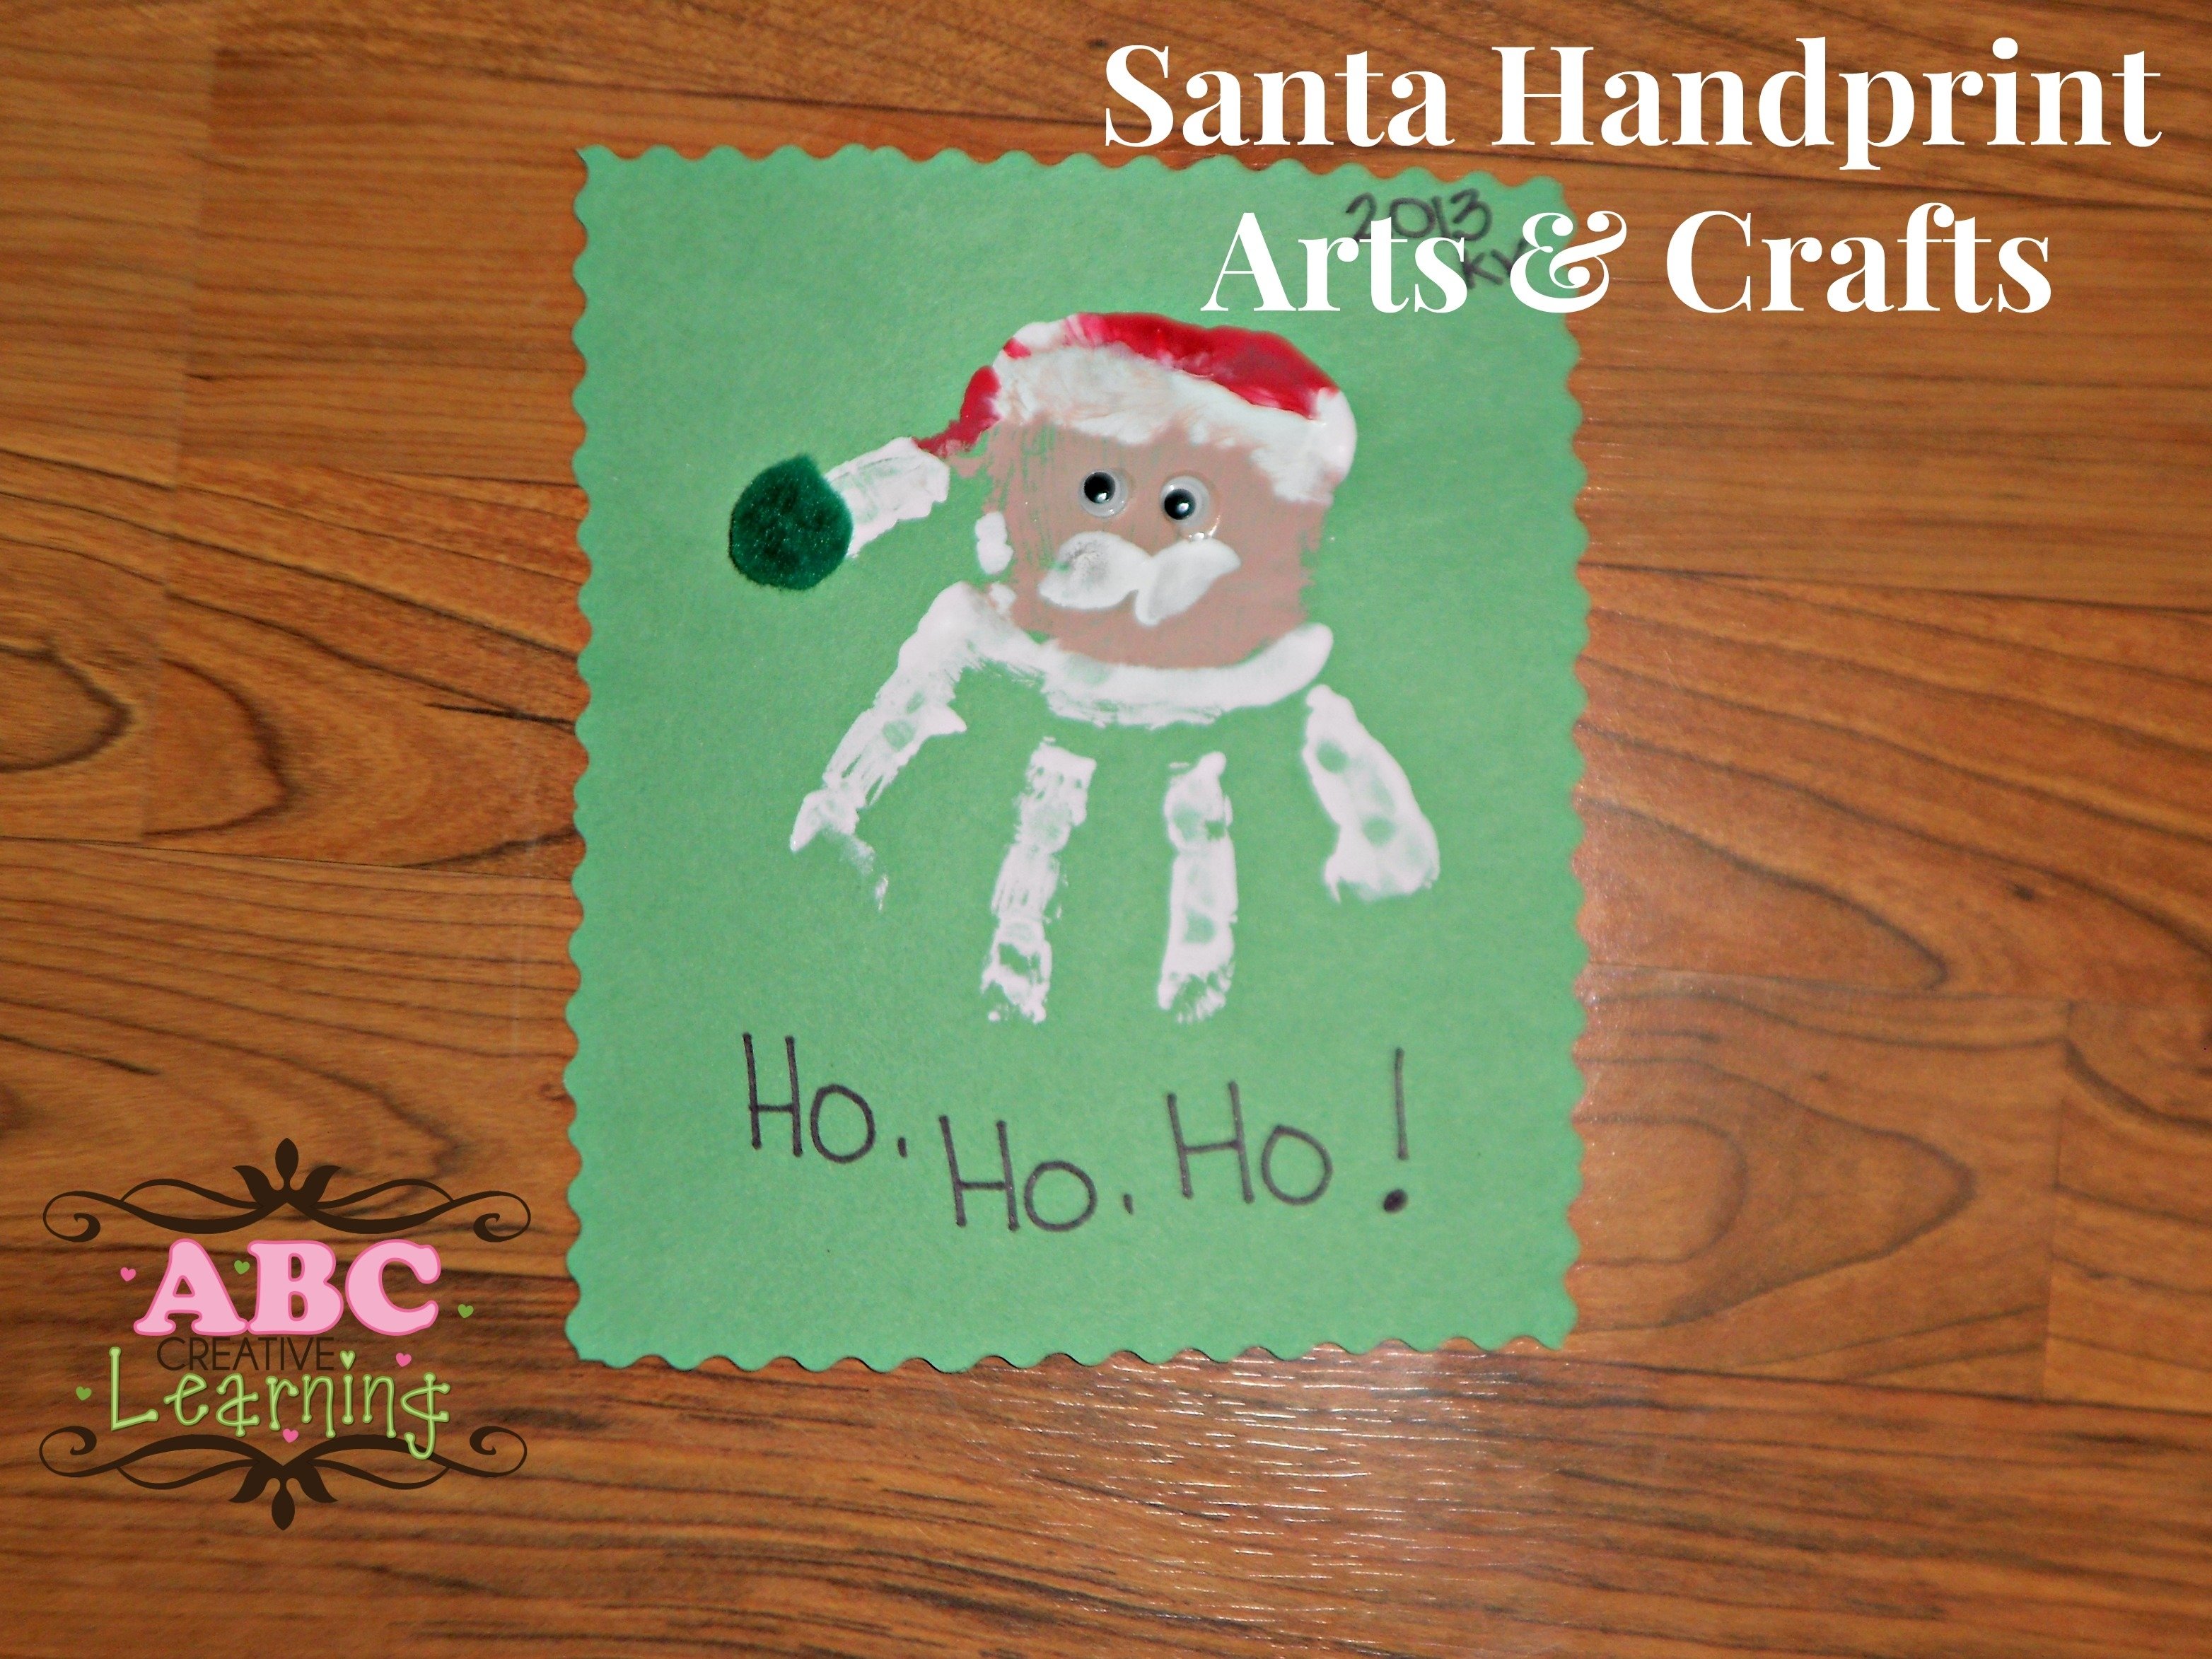 10 Pretty Christmas Arts And Craft Ideas christmas arts crafts kids santa handprint tierra este 55311 1 2022